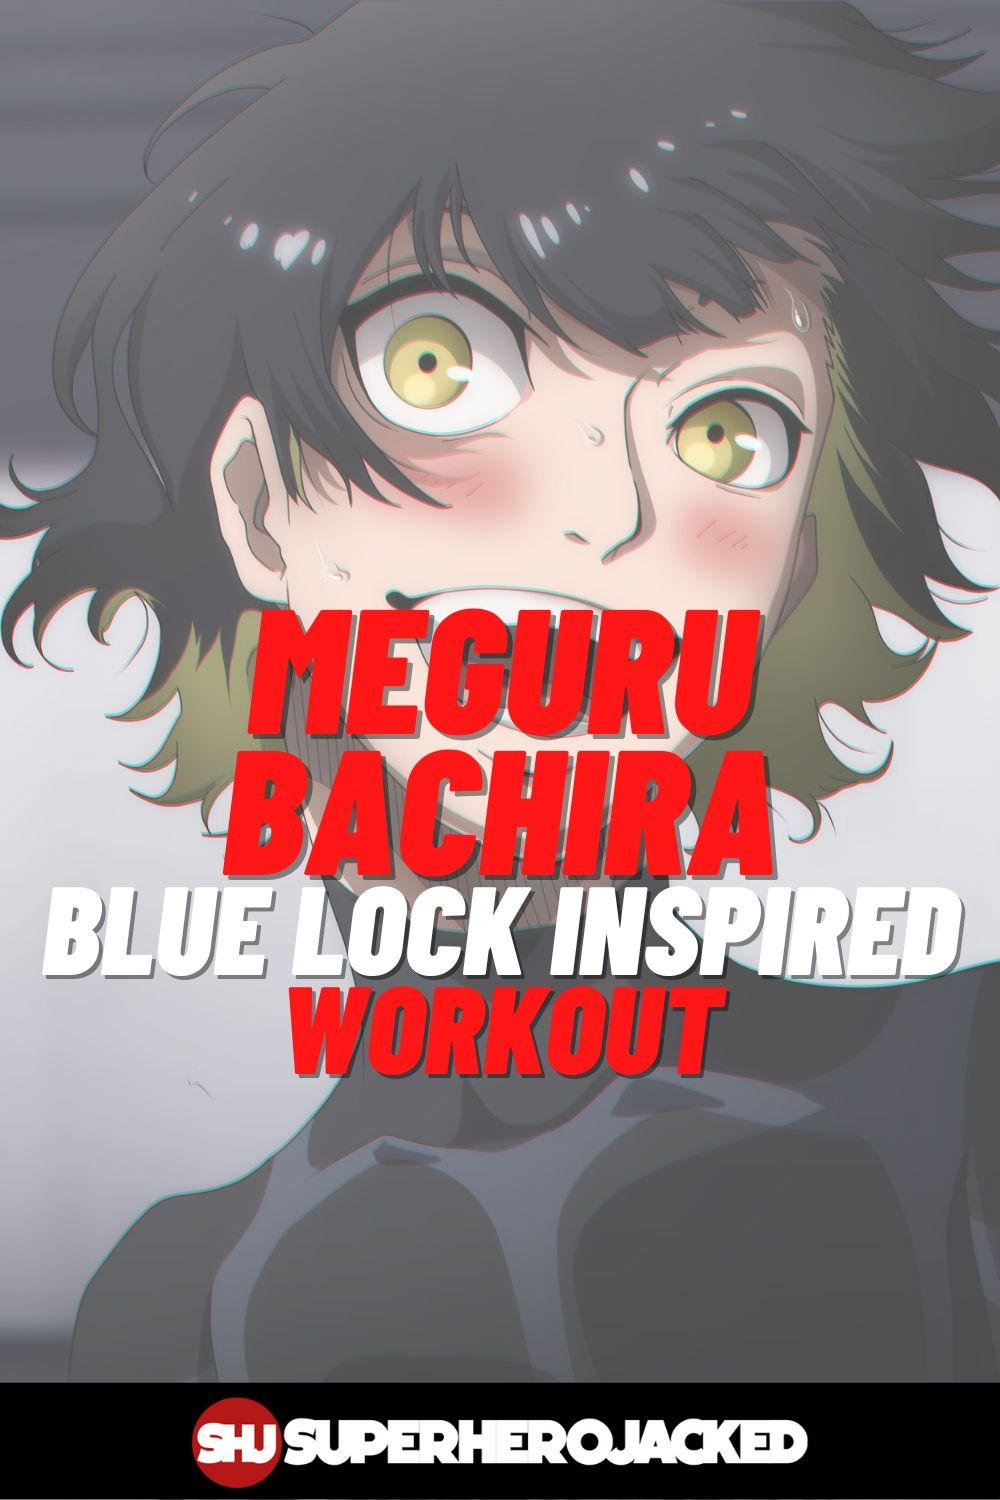 Meguru Bachira Inspired Workout Routine